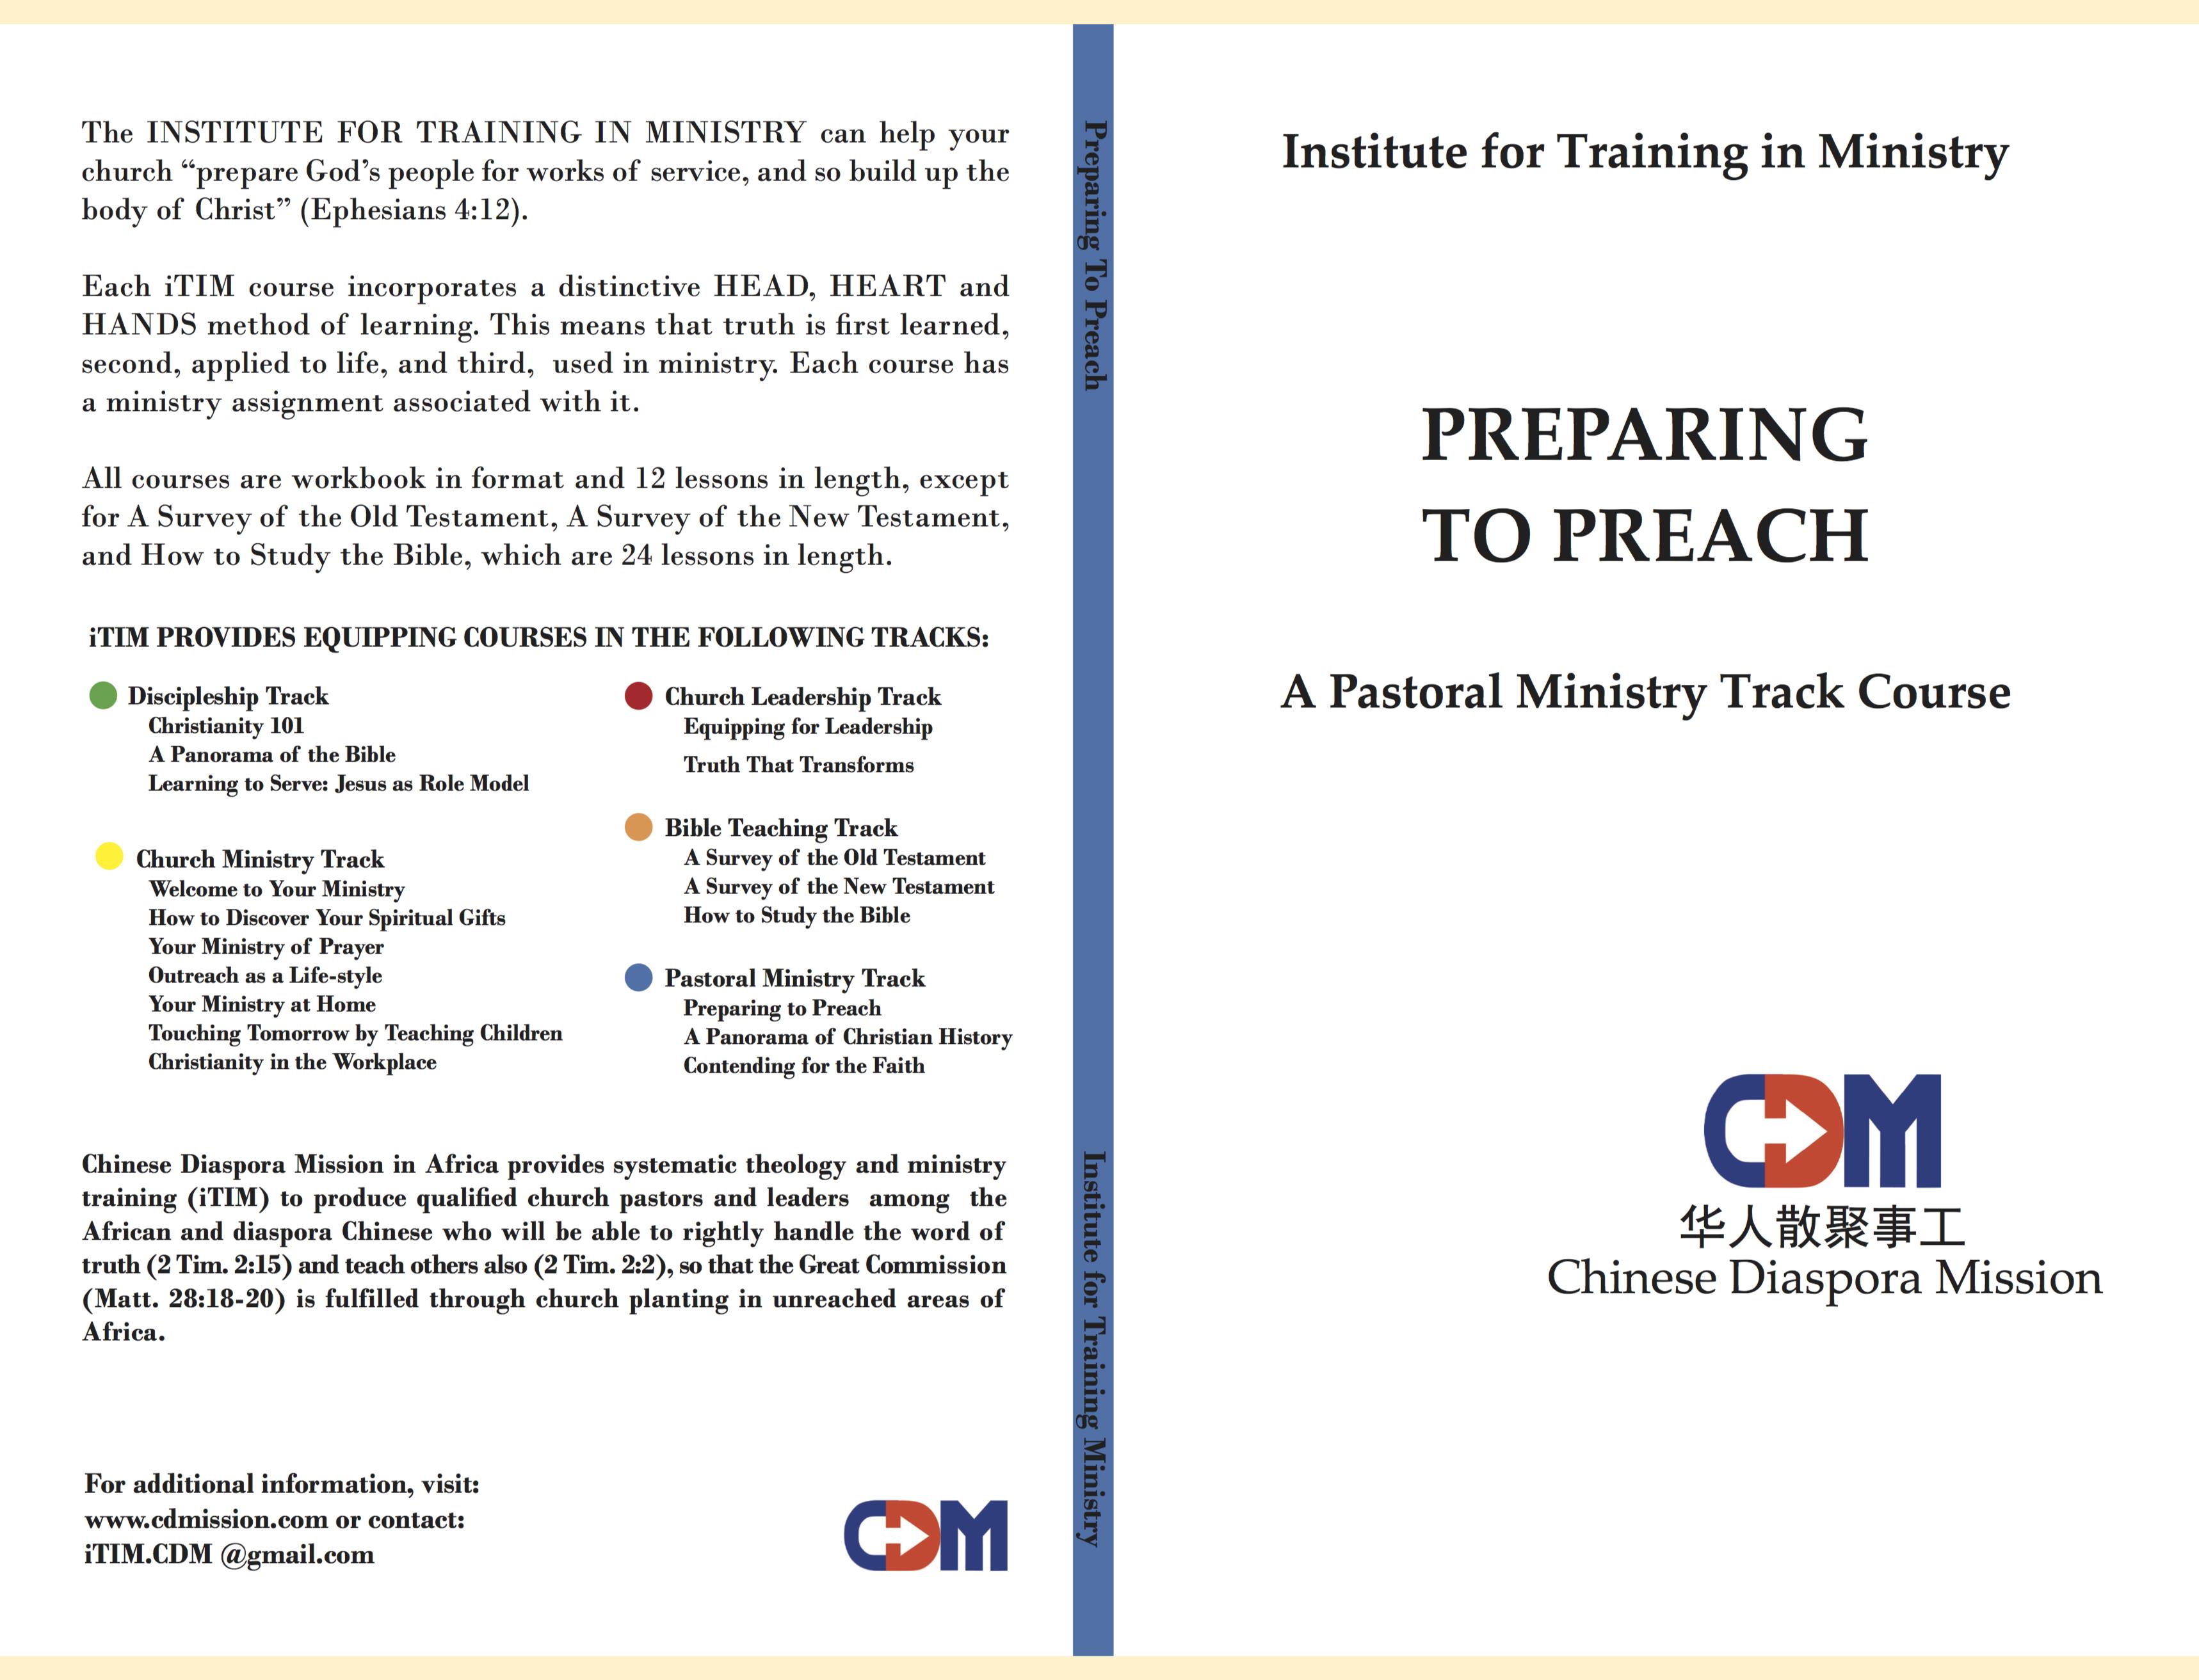 Preparing to Preach CDM cover image